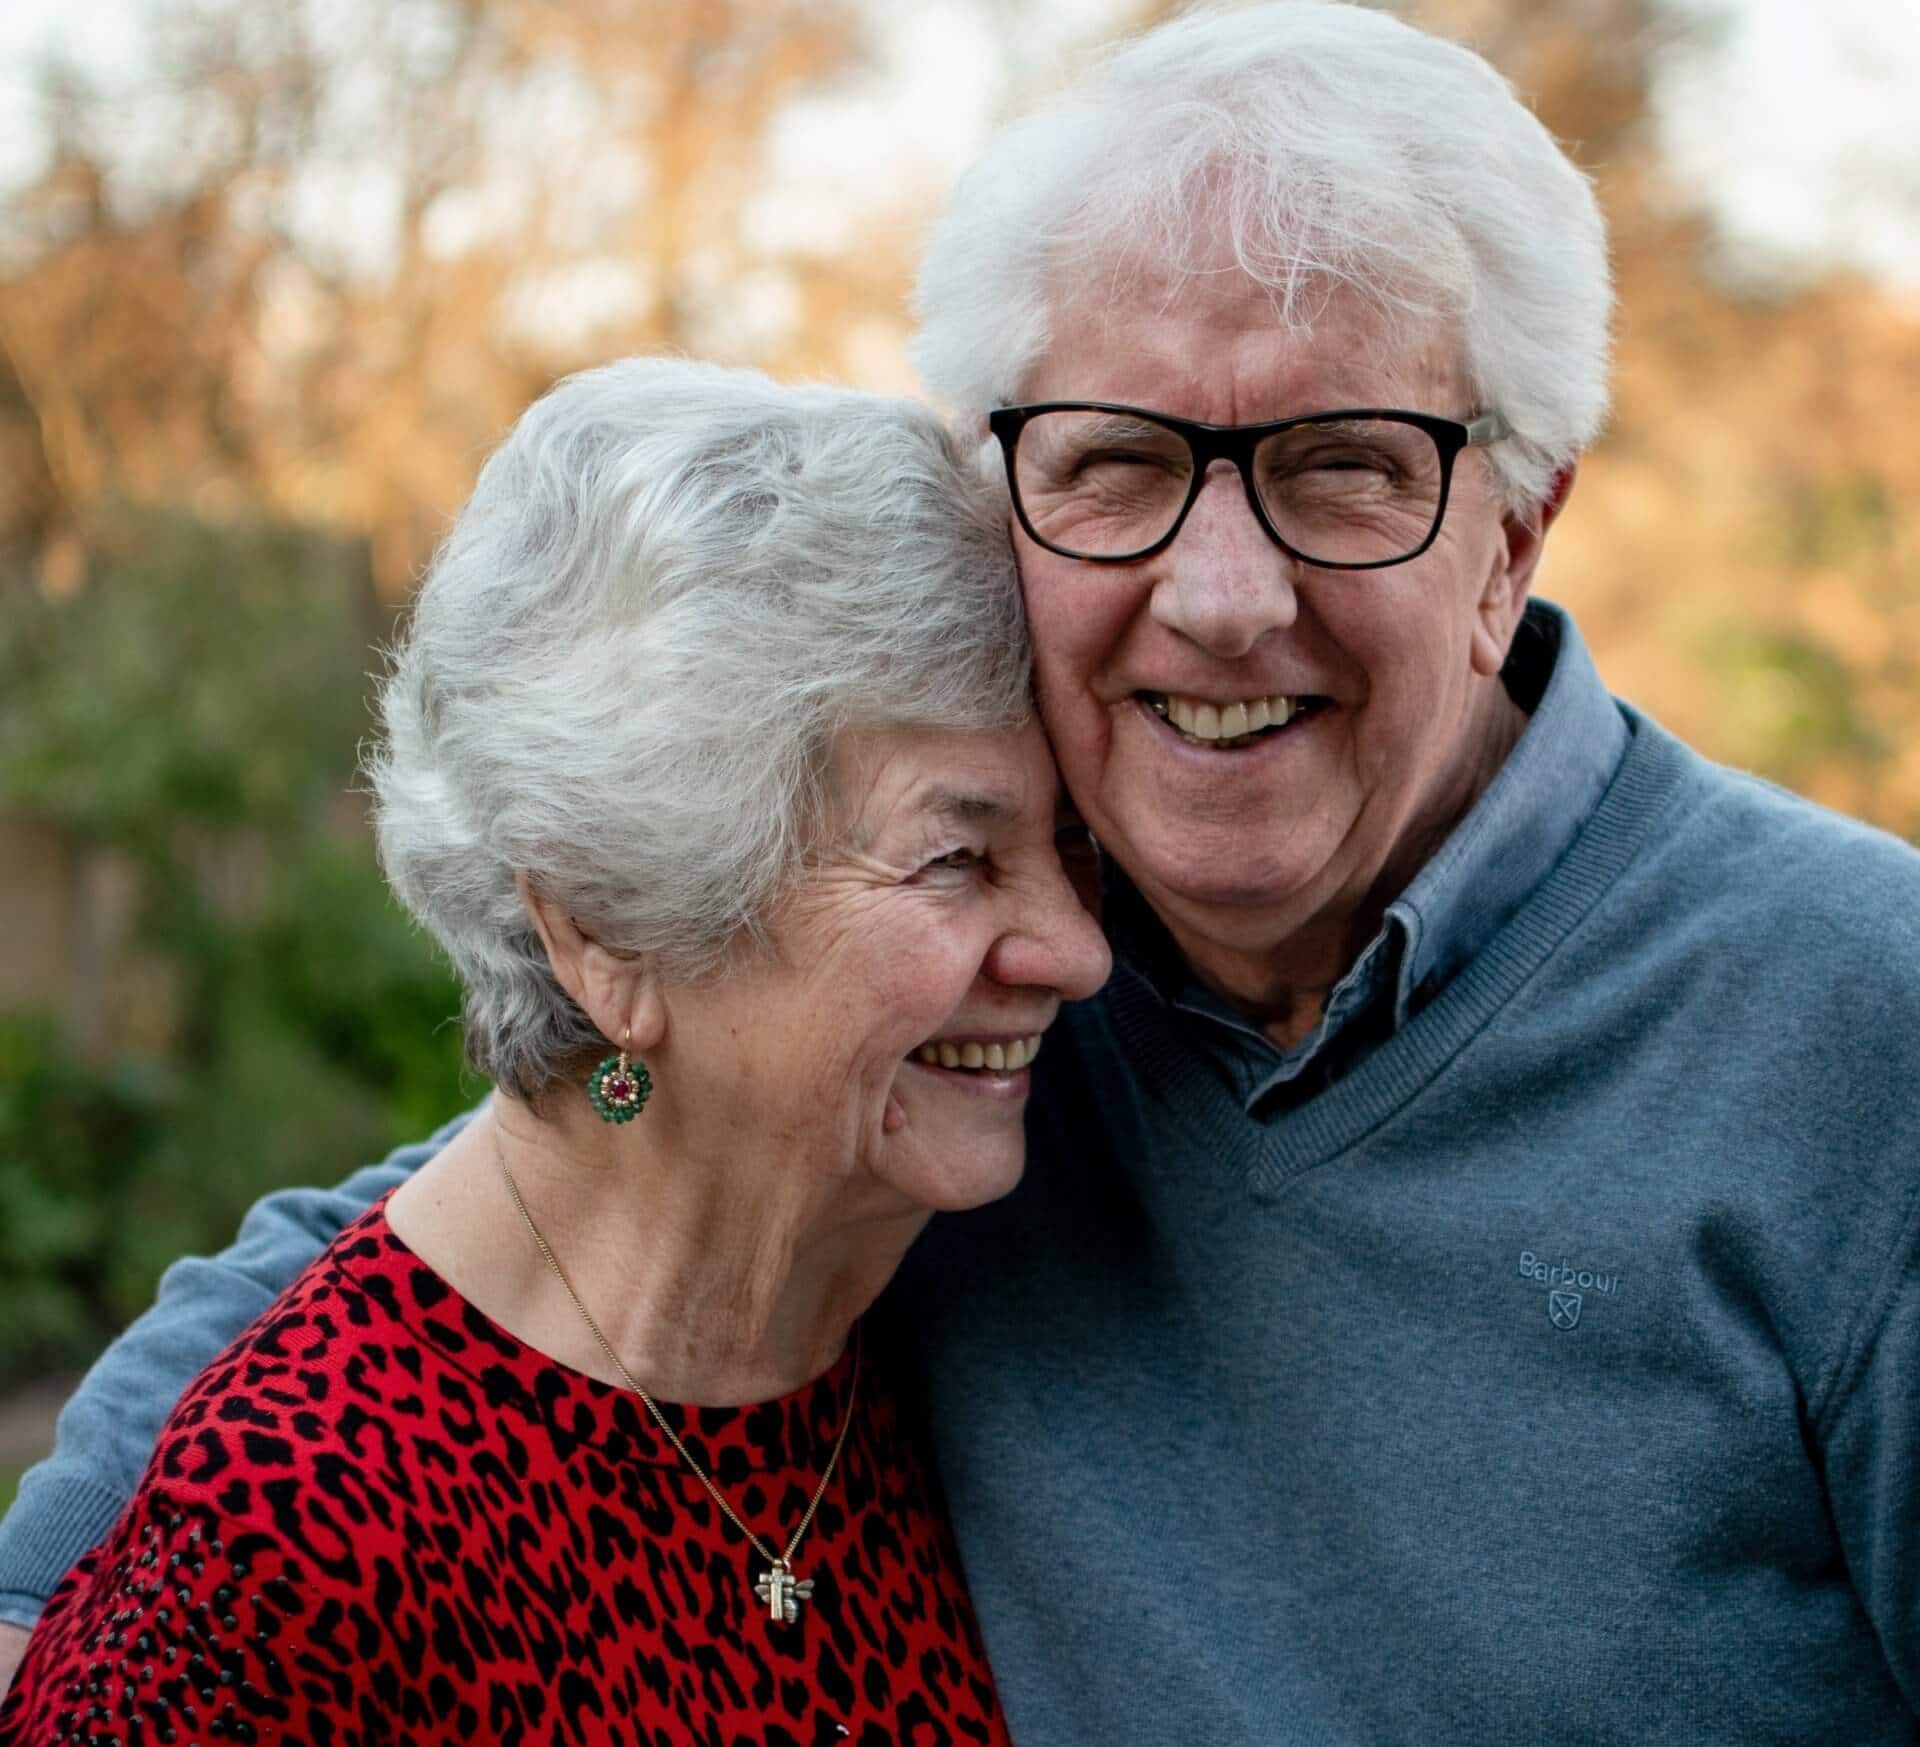 Assisted Living Communities for Alzheimer's